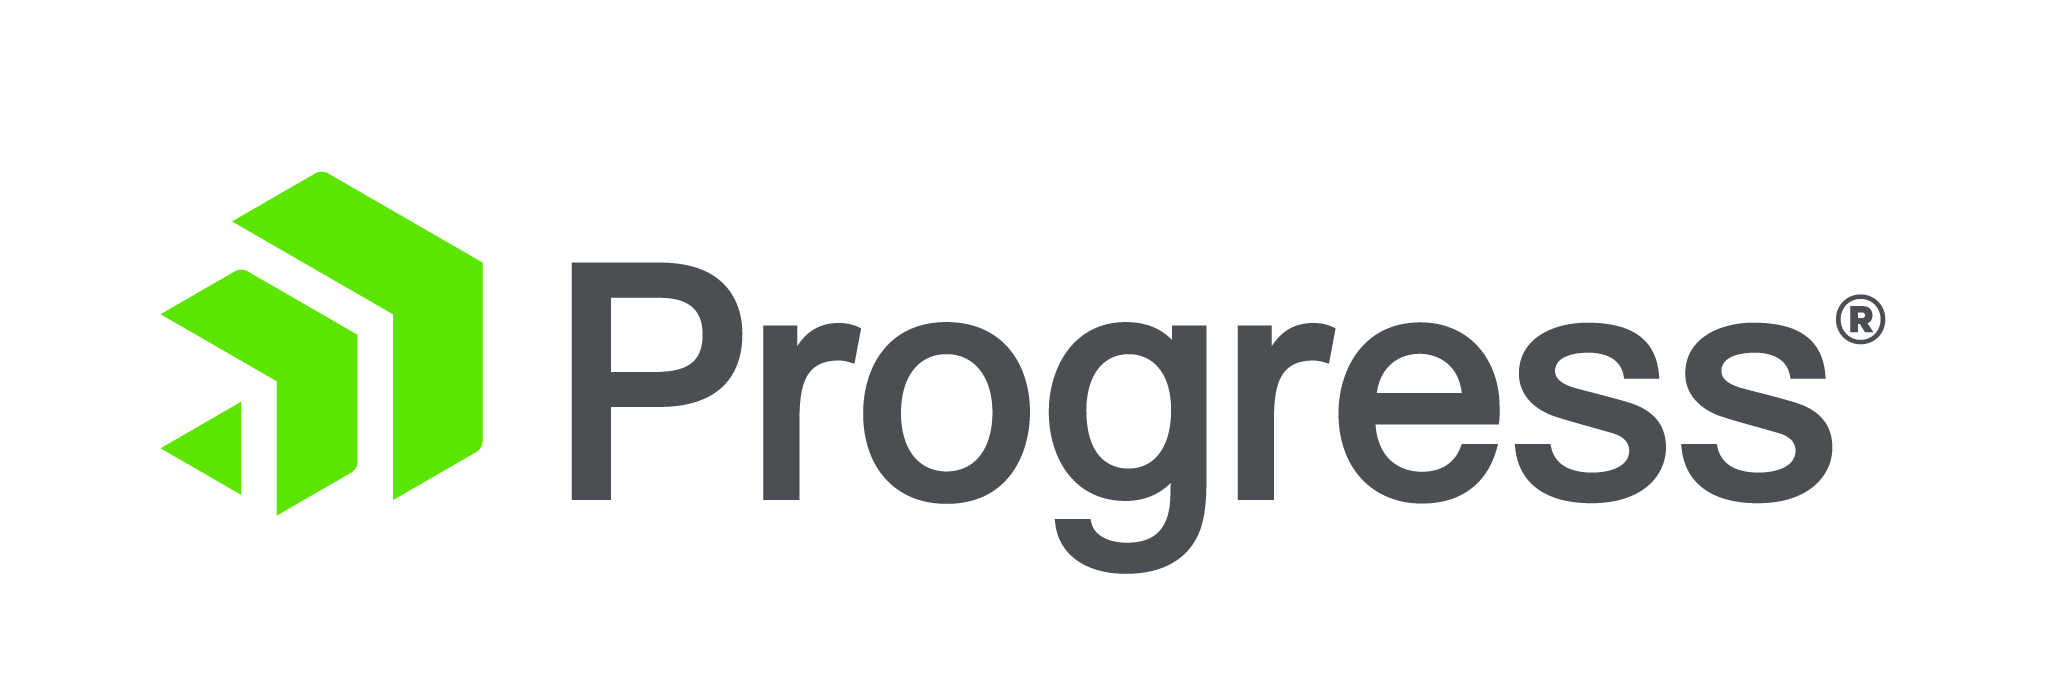 progress brandmark rgb primary